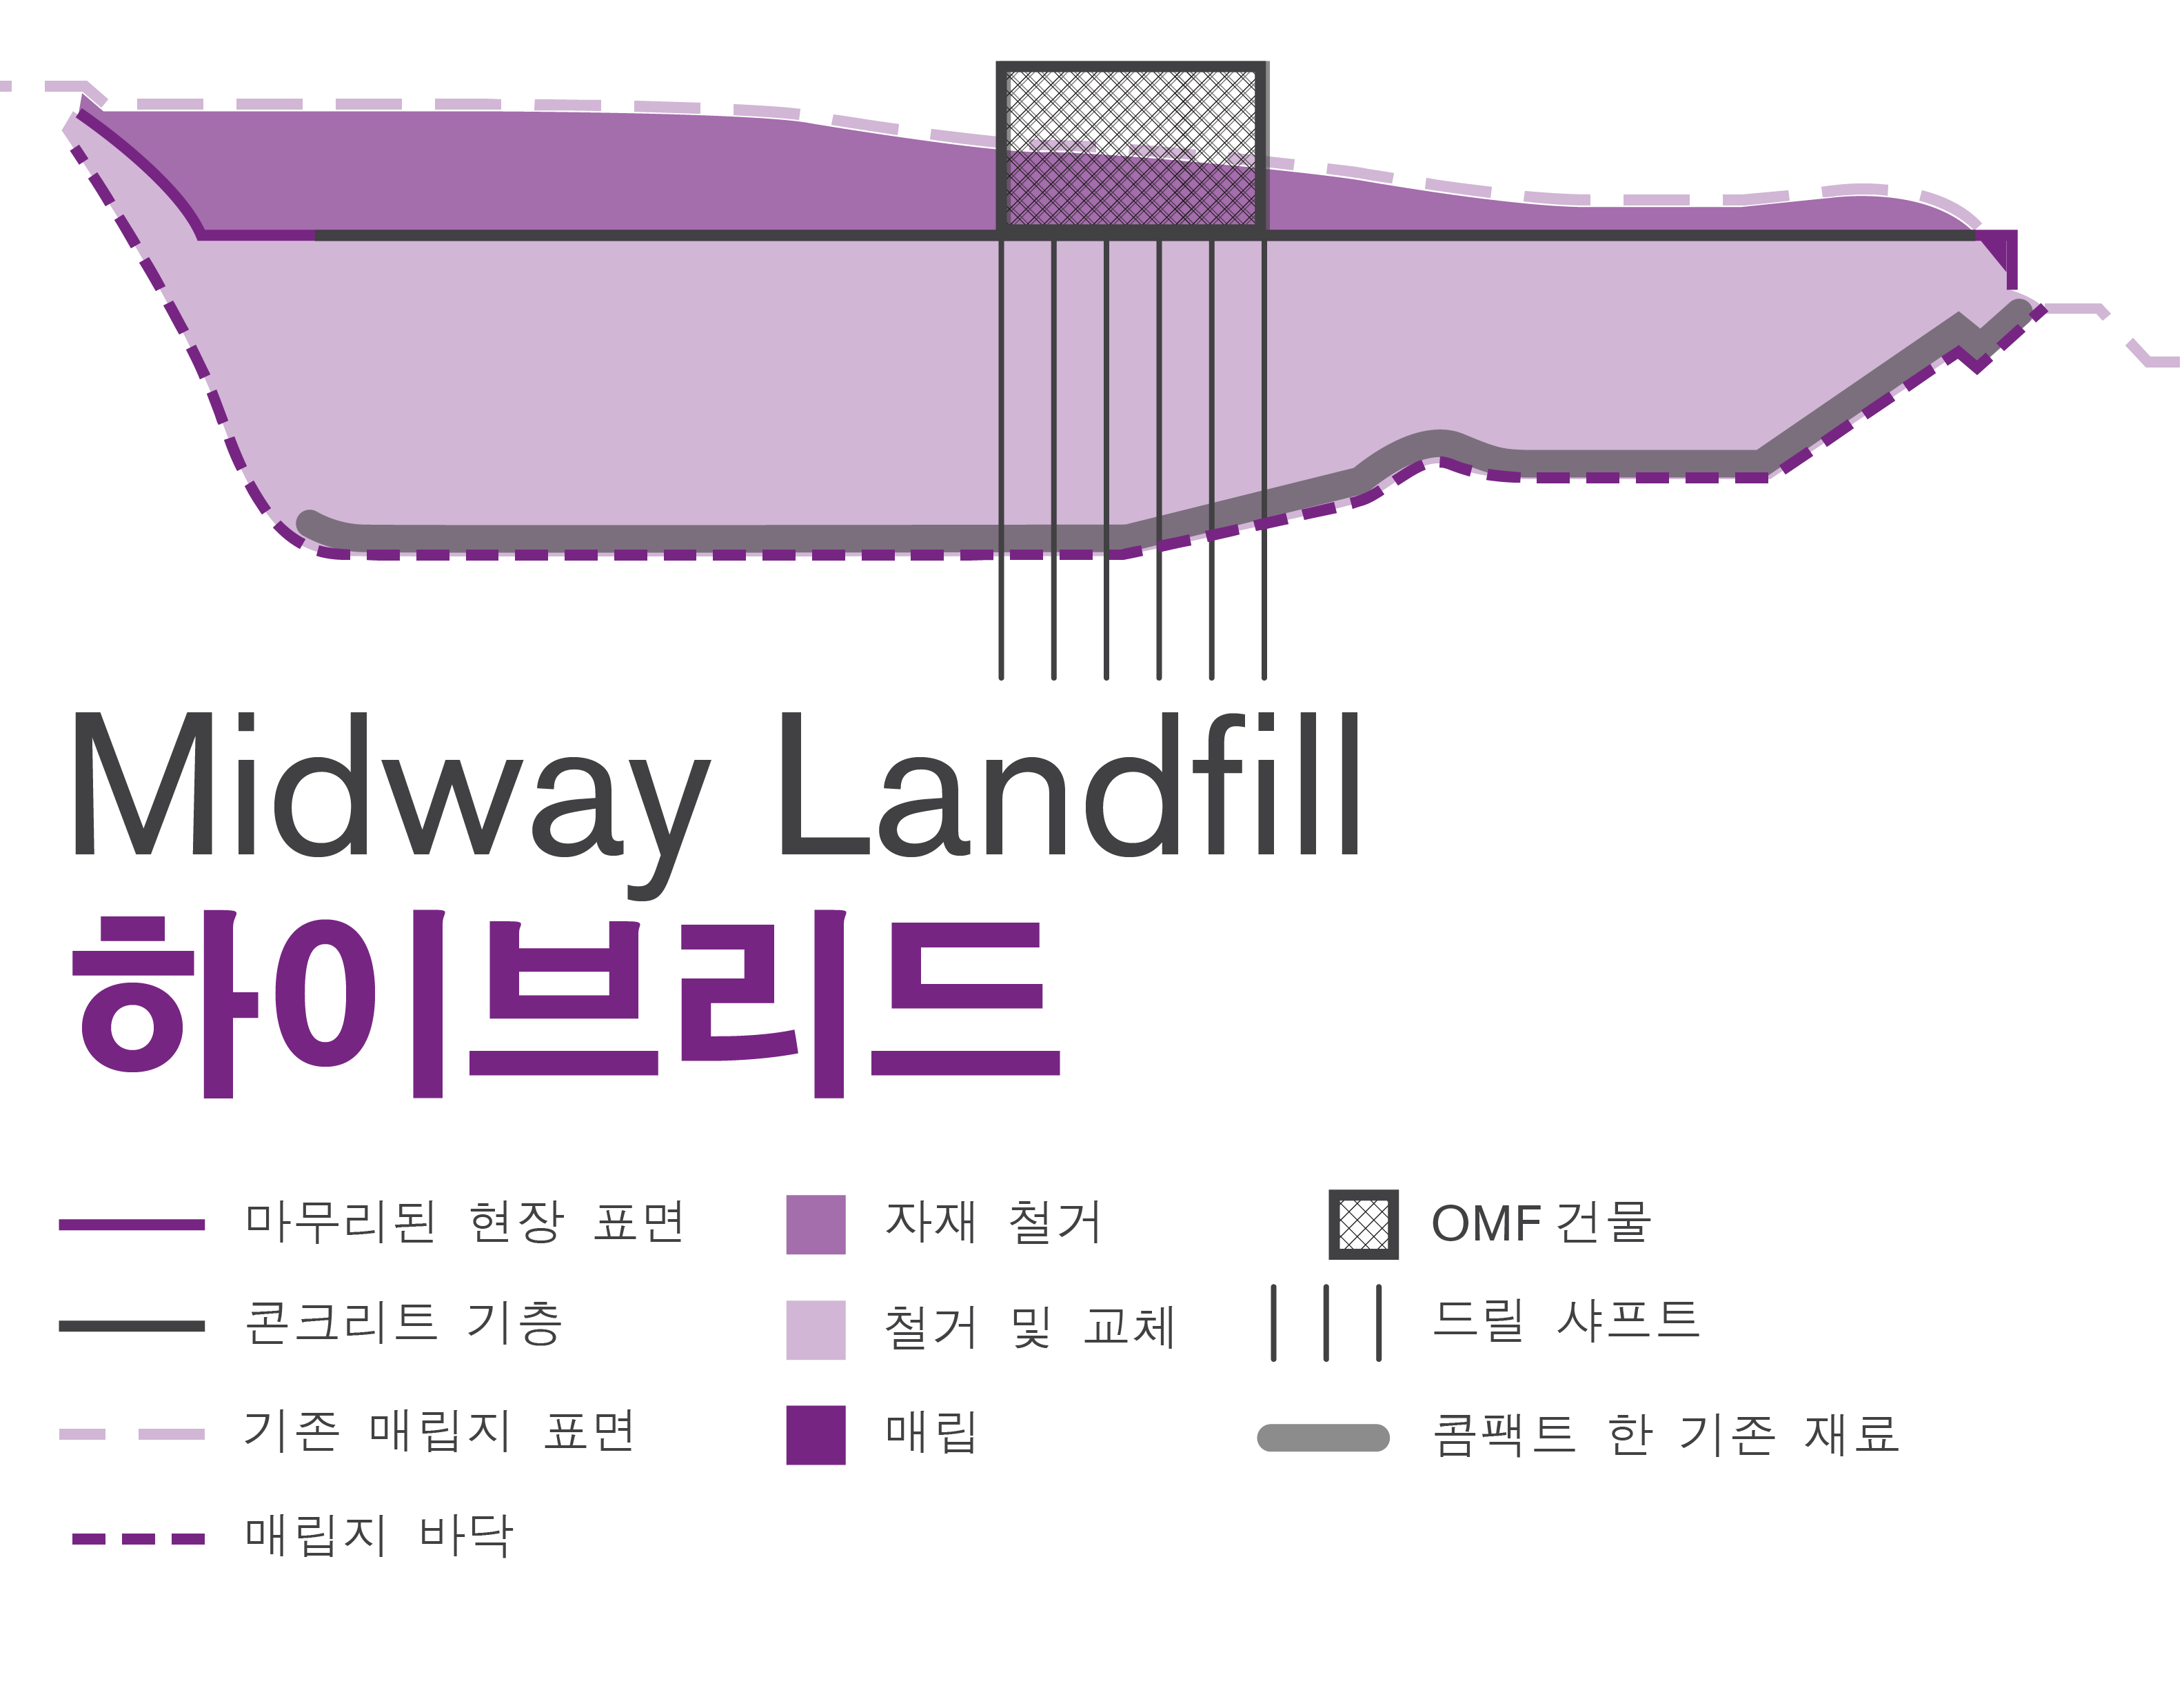 Midway Landfill 하이브리드 건축 방식을 보여주는 그래픽.